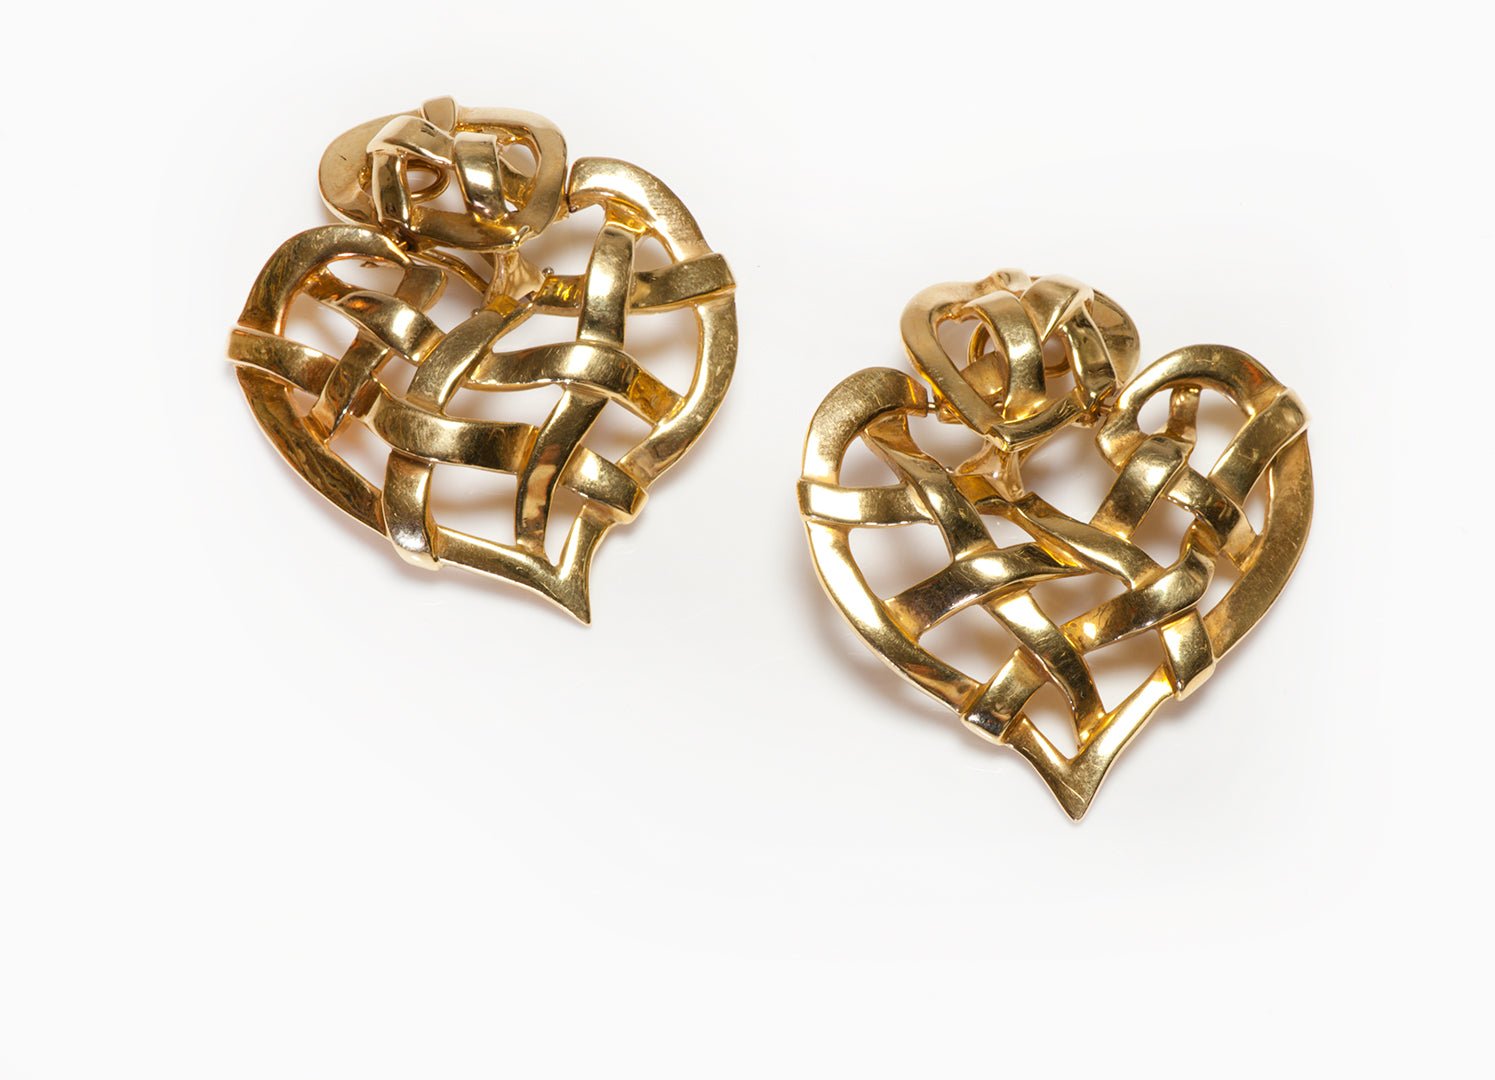 Boris LeBeau 18K Yellow Gold Heart Shaped Earrings